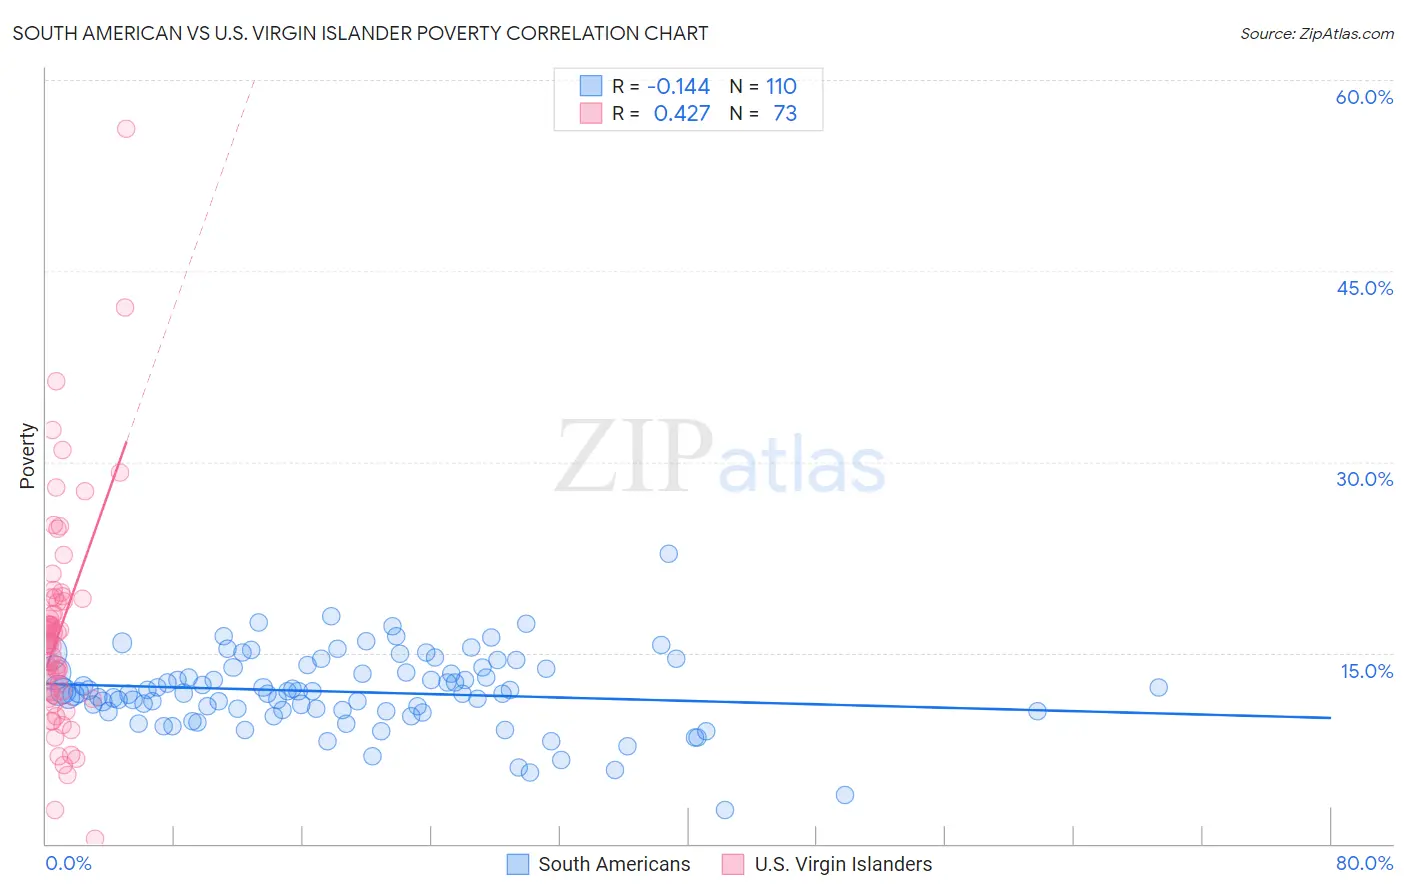 South American vs U.S. Virgin Islander Poverty